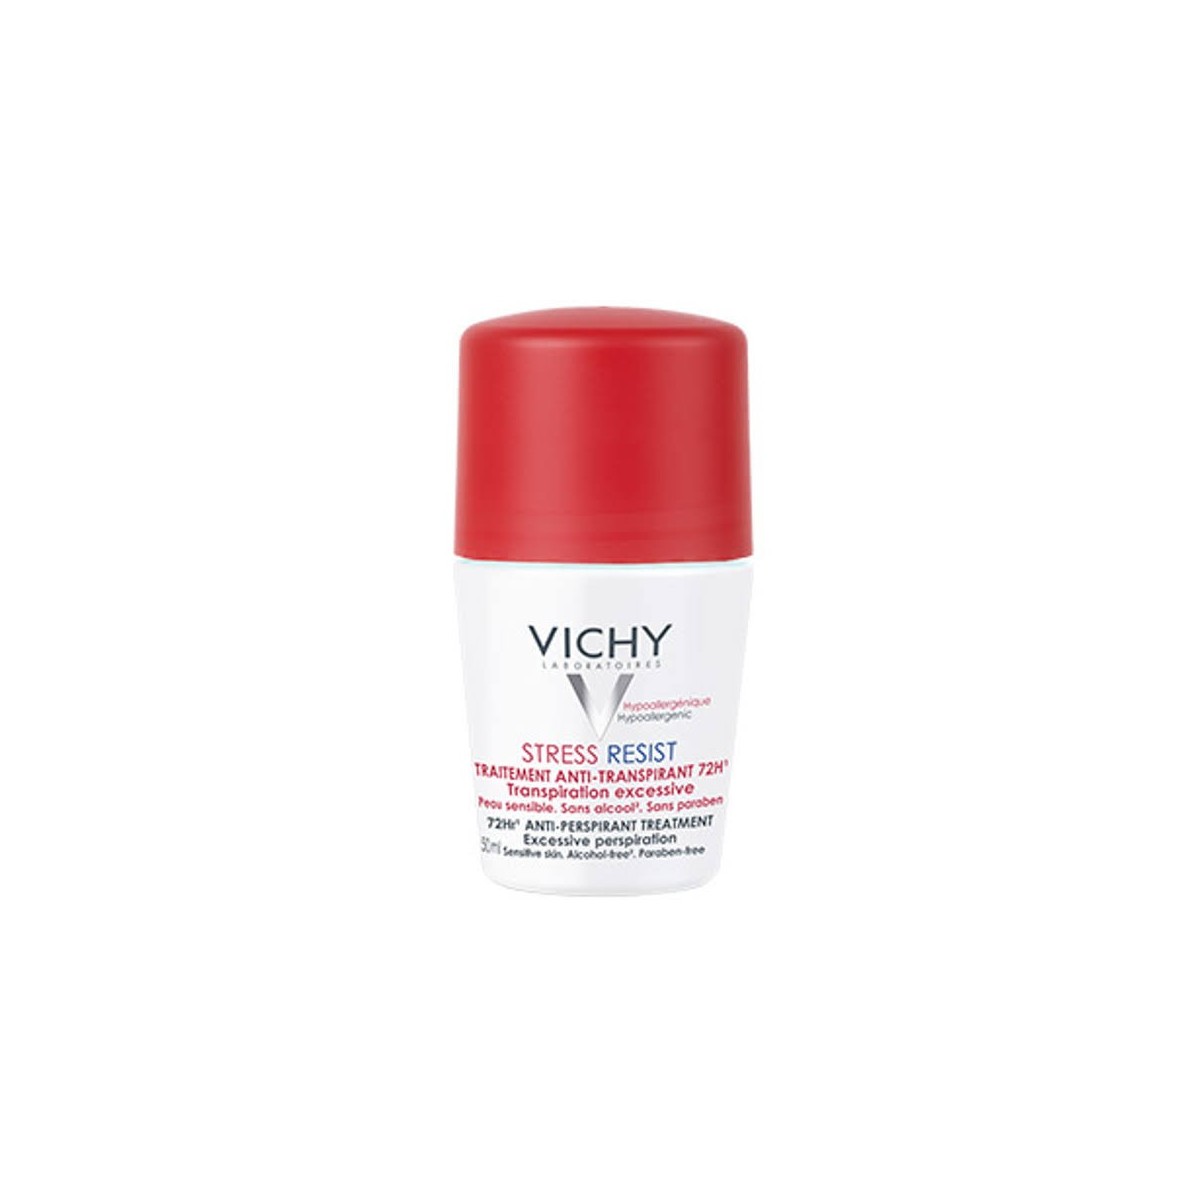 vichy stress resist desodorante 72h 50ml